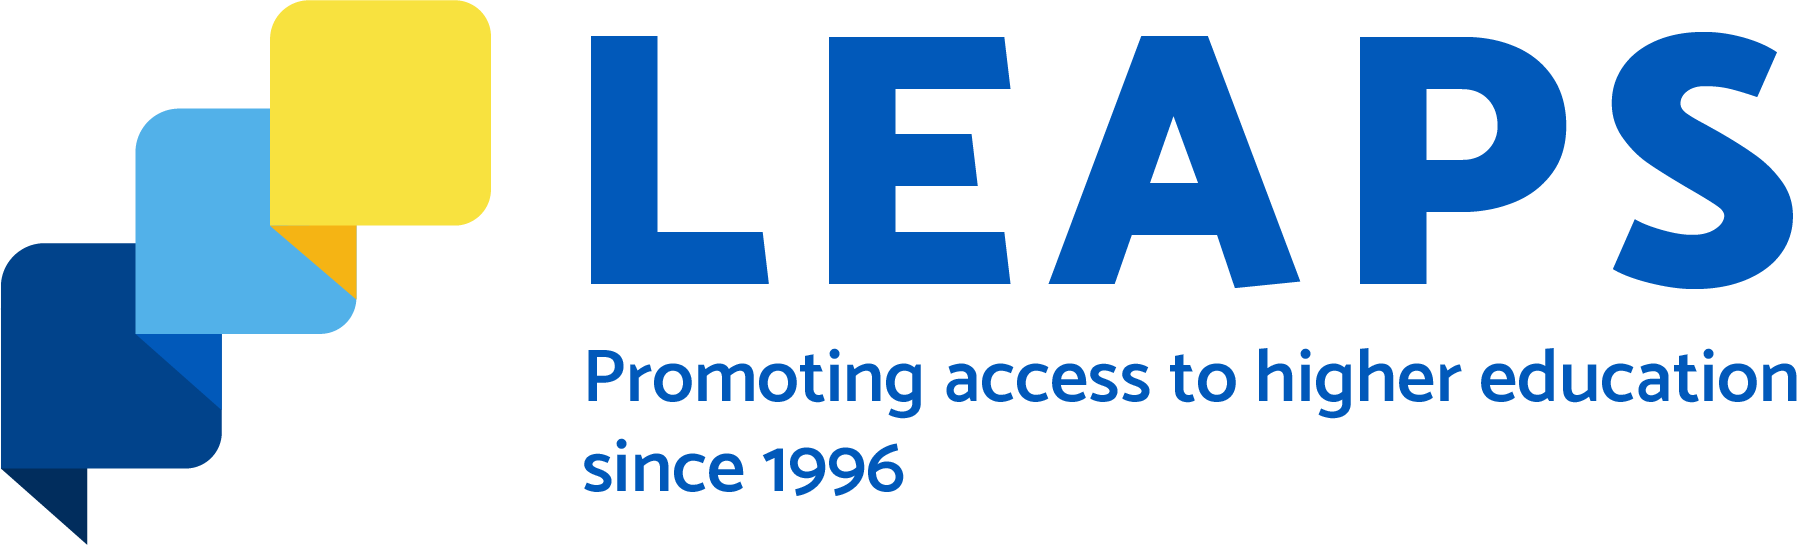 Lothians Equal Access Programme for Schools Logo